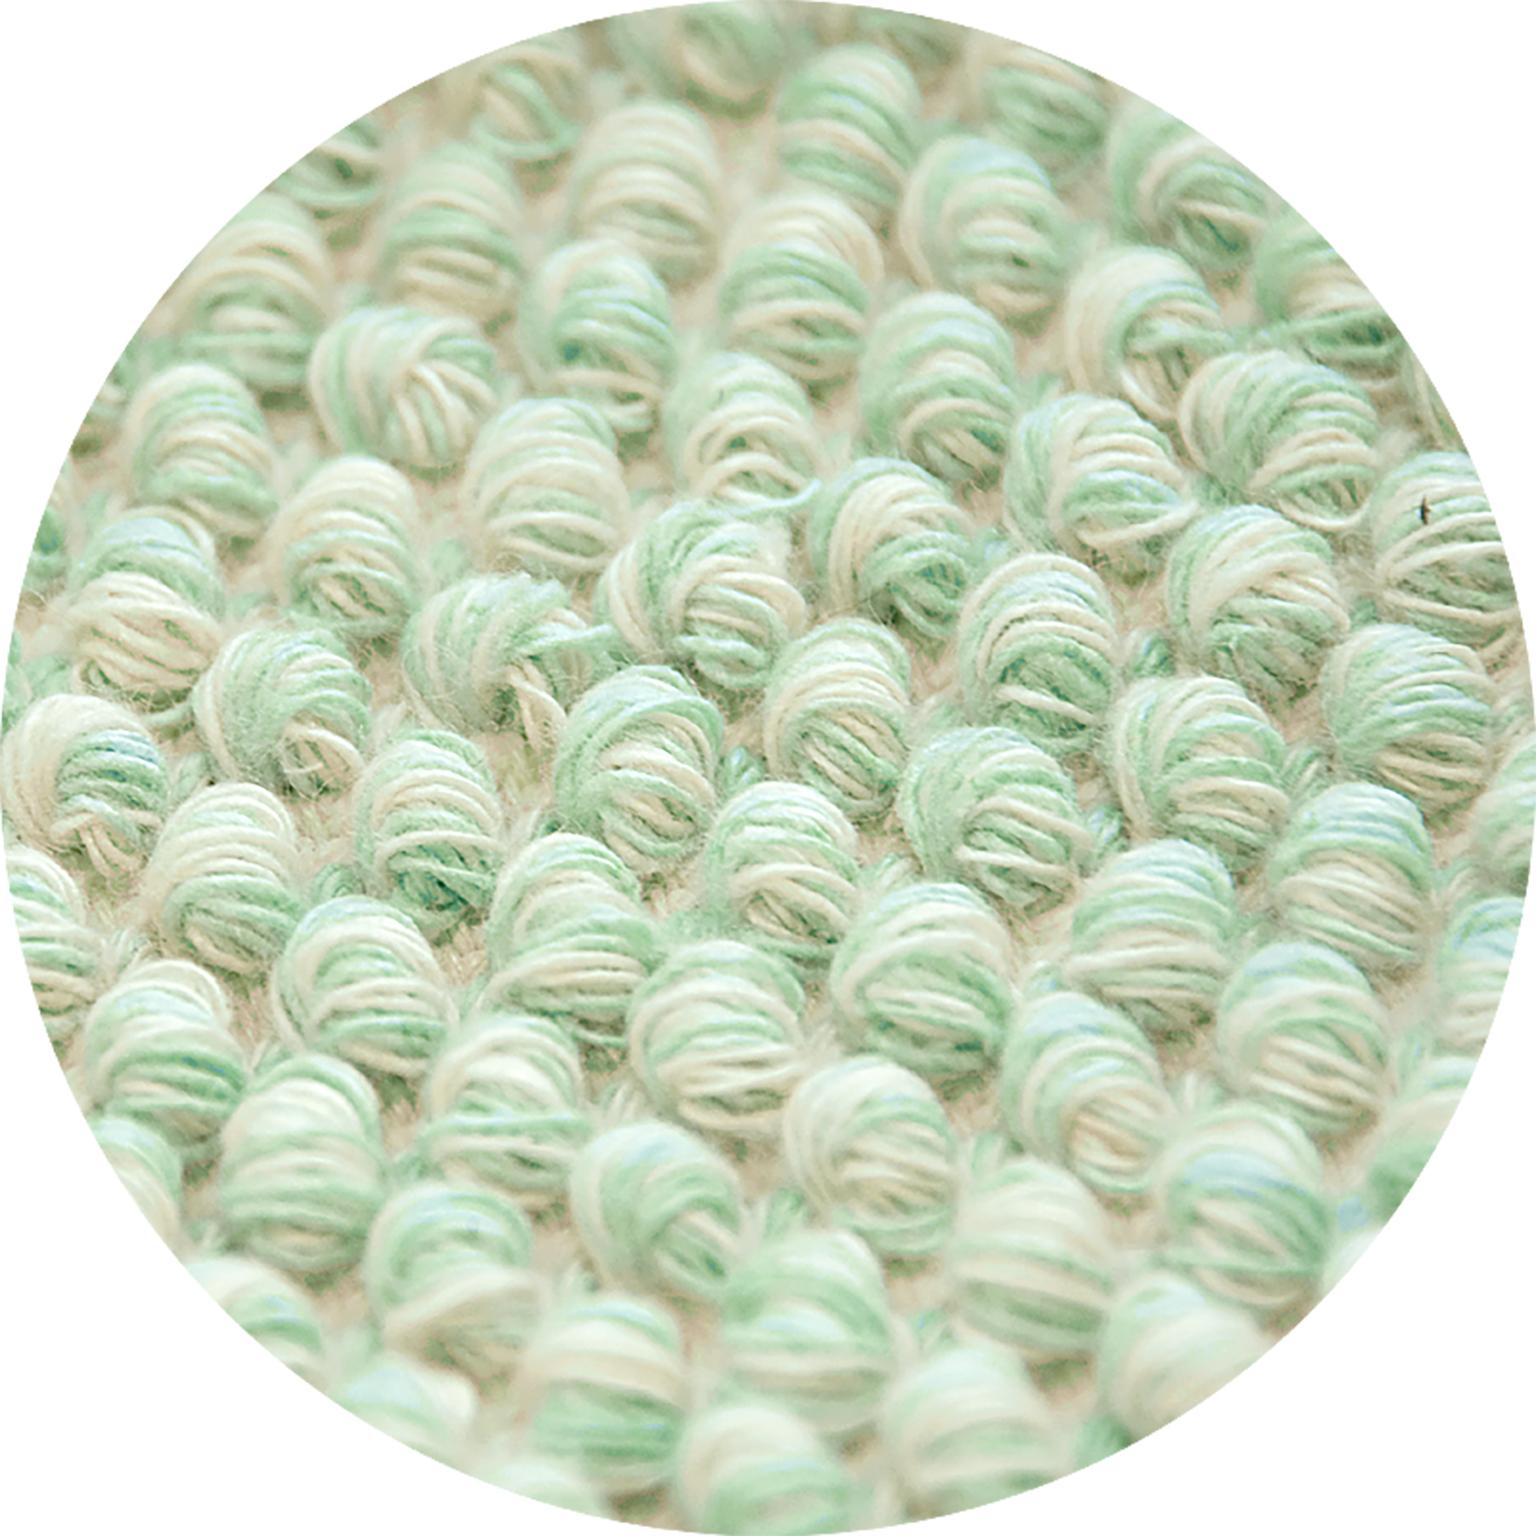 Contemporary Sardinian handwoven carpet
Sardinia, Italy
100% cotton melange light green.